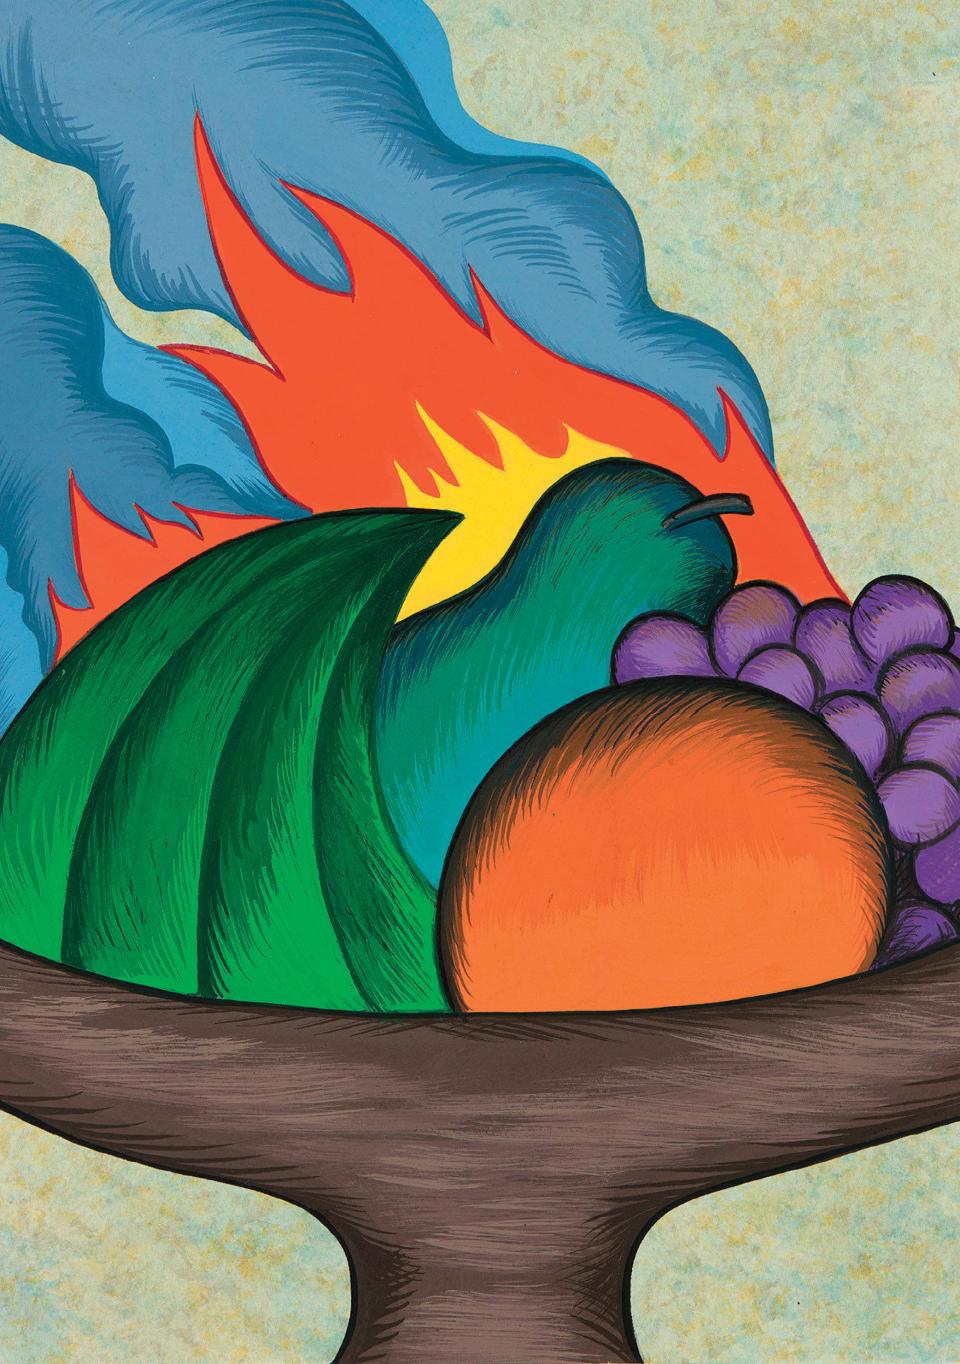 Fruit Bowl on Fire (2015).